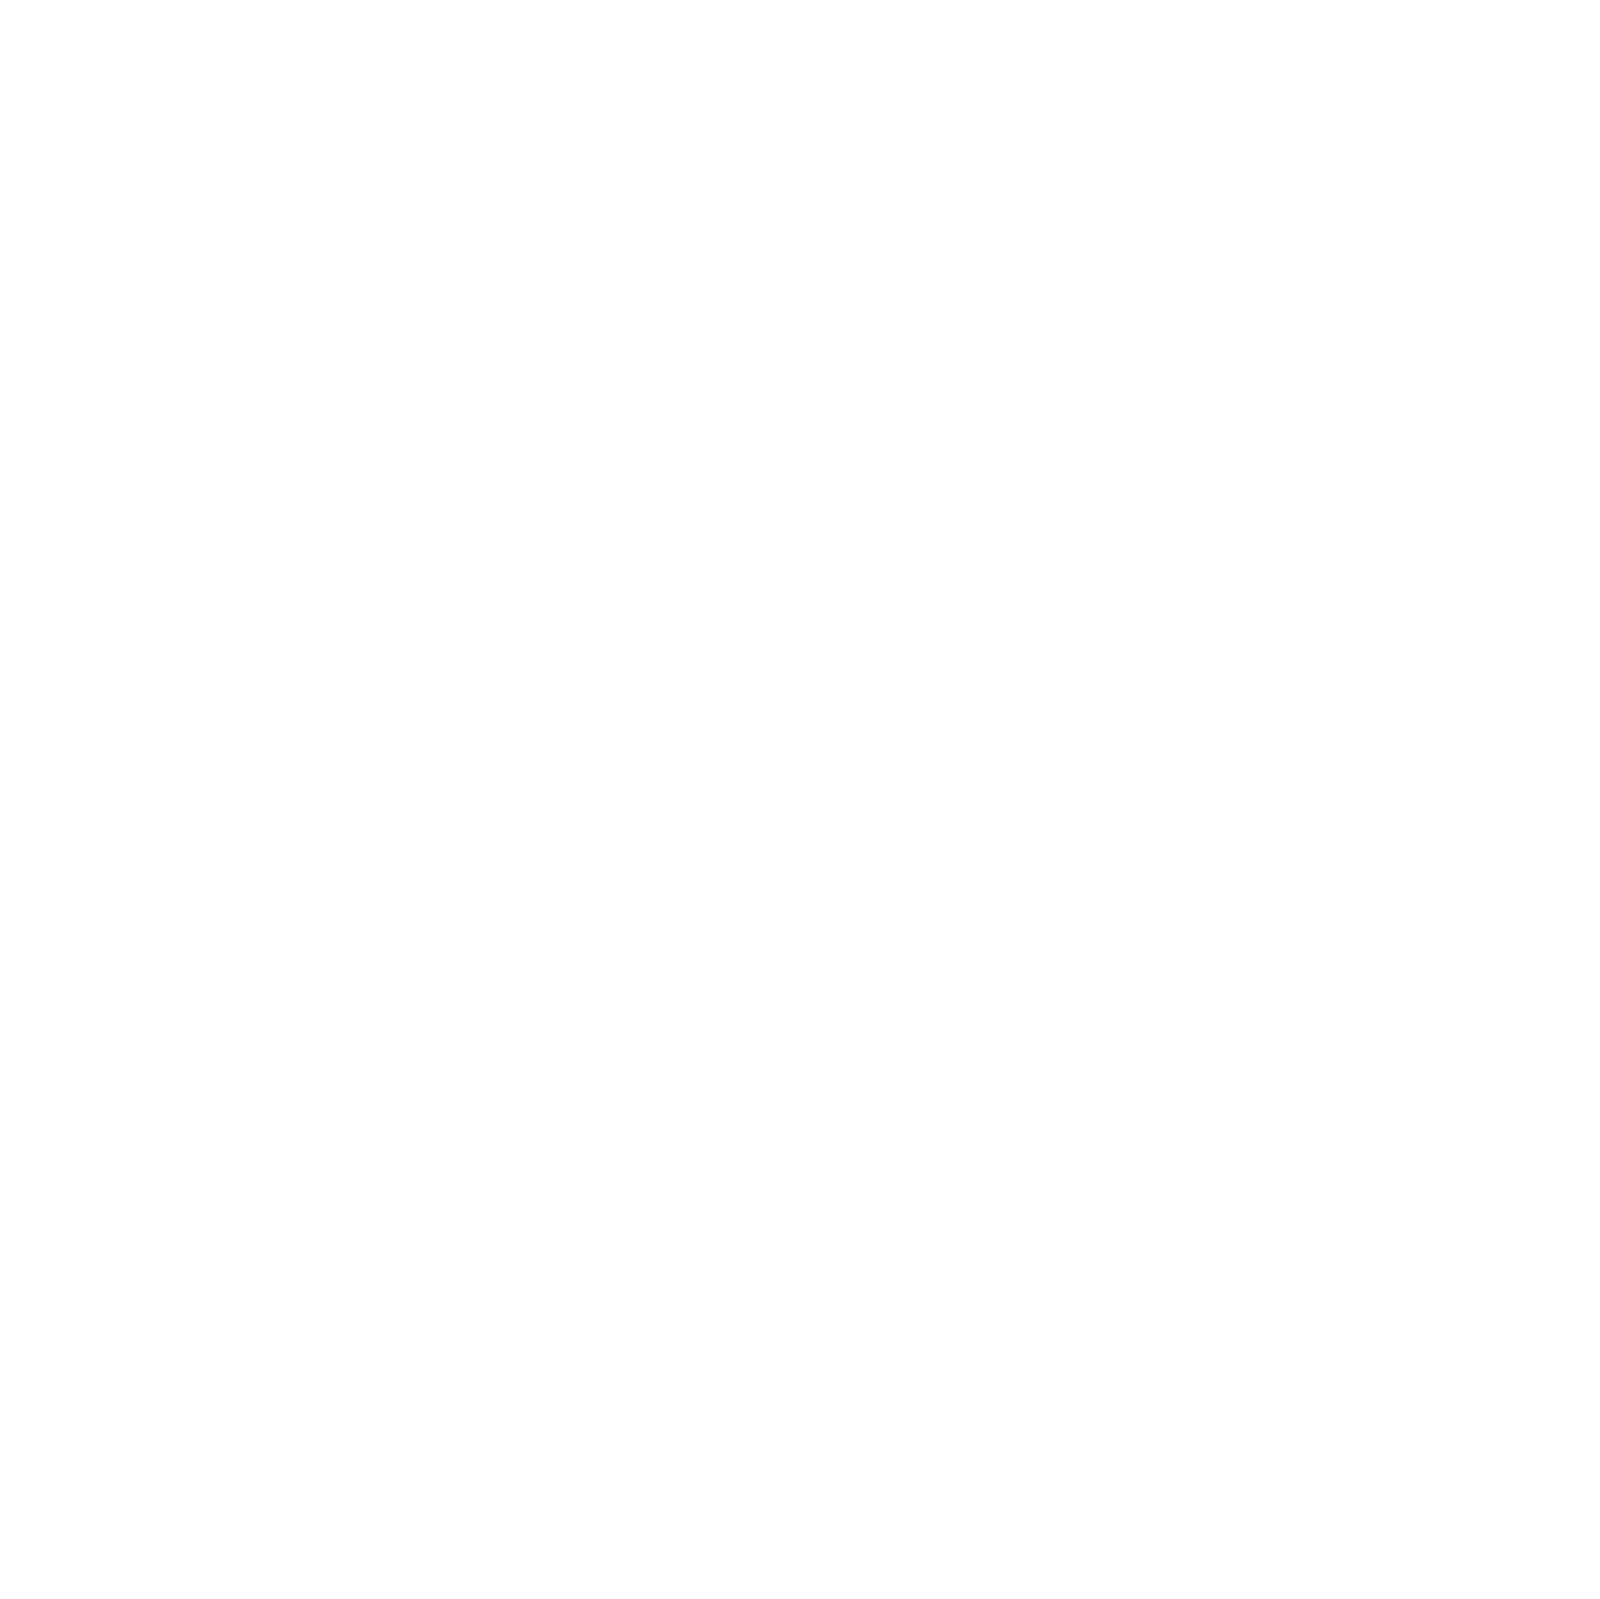 xecute white